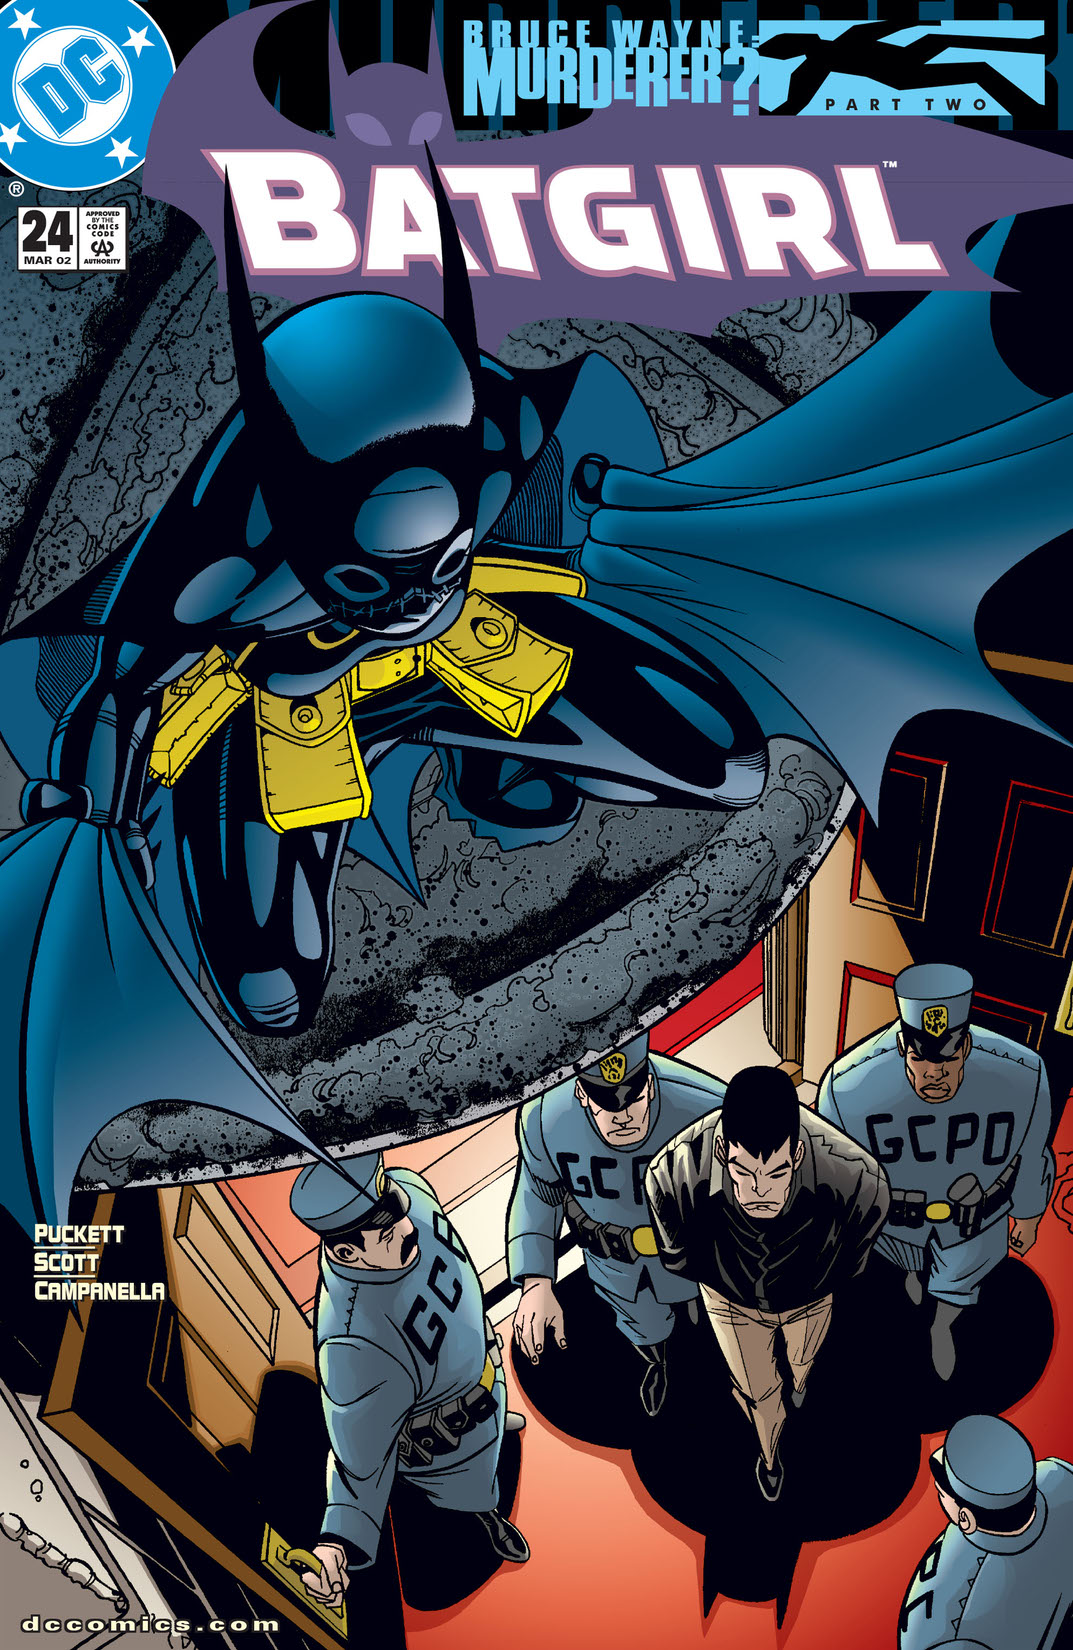 Batgirl (2000-) #24 preview images